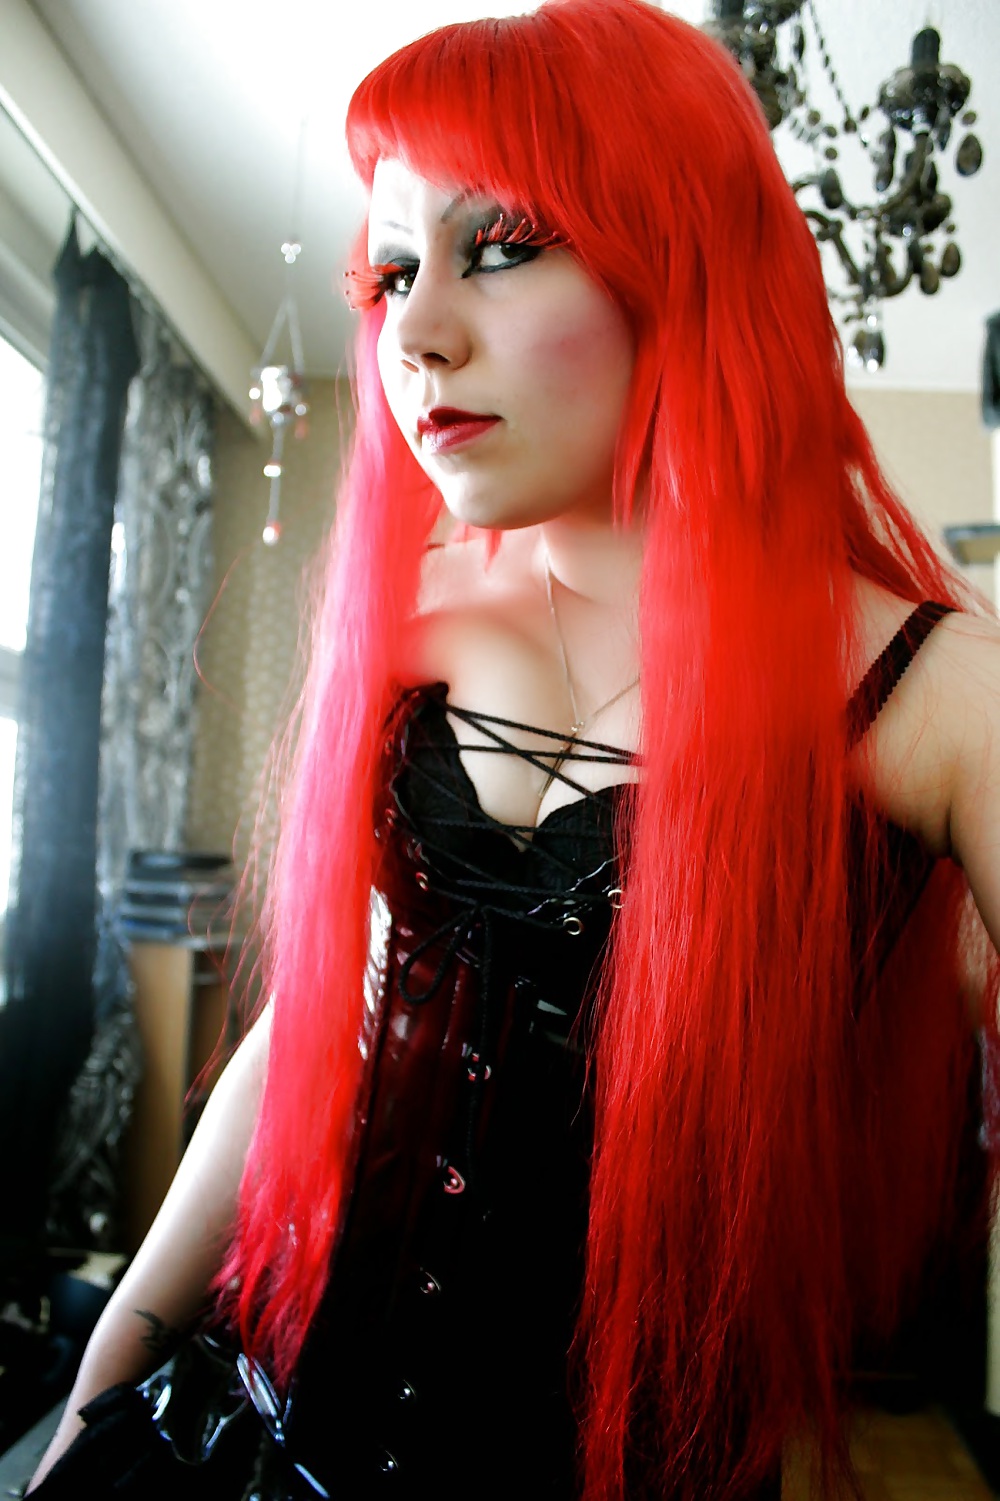 Gothic finnish blog girl #30152201